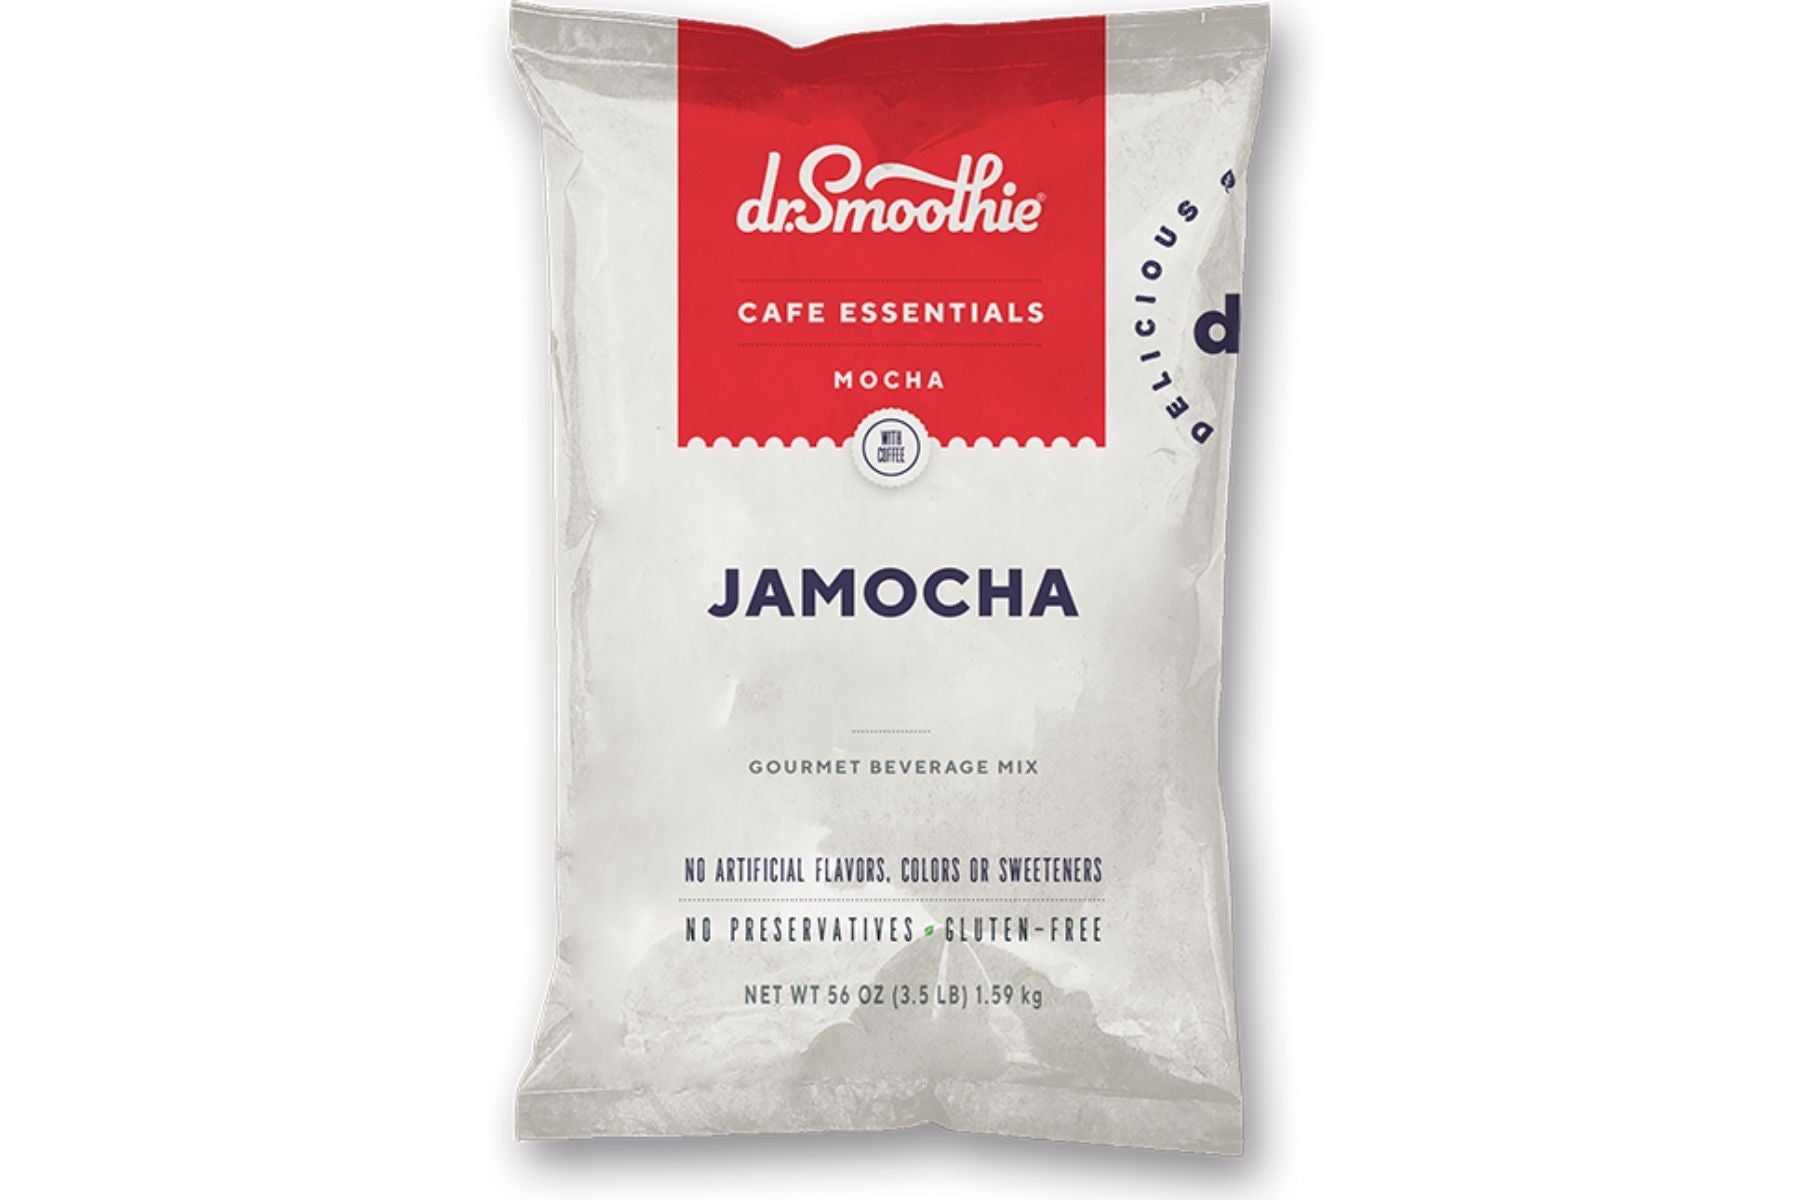 Dr. Smoothie Cafe Essentials Mocha - 3.5lb Bulk Bag: Jamocha